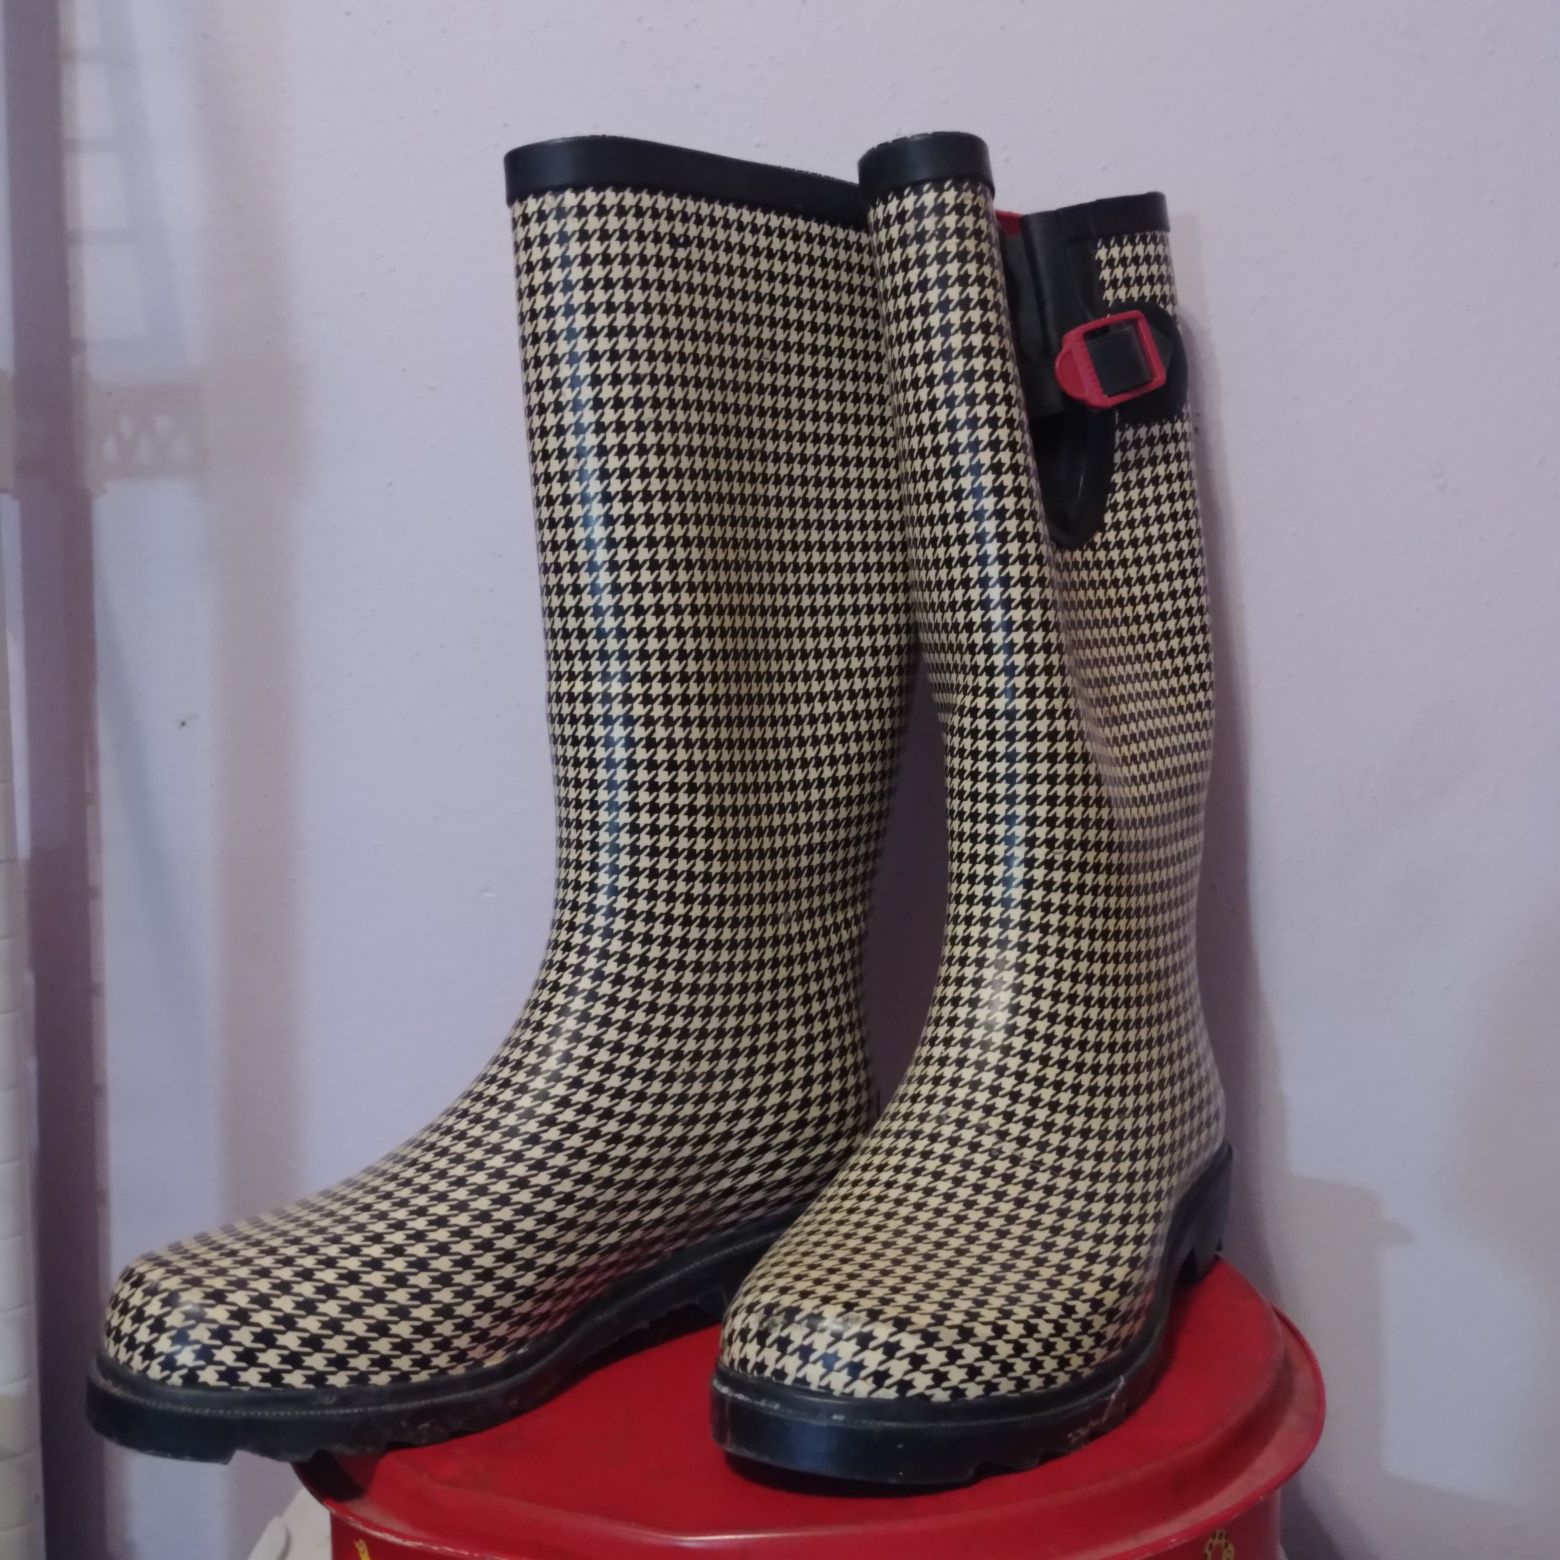 Austin Trading Company rain boots. Women's size 5.